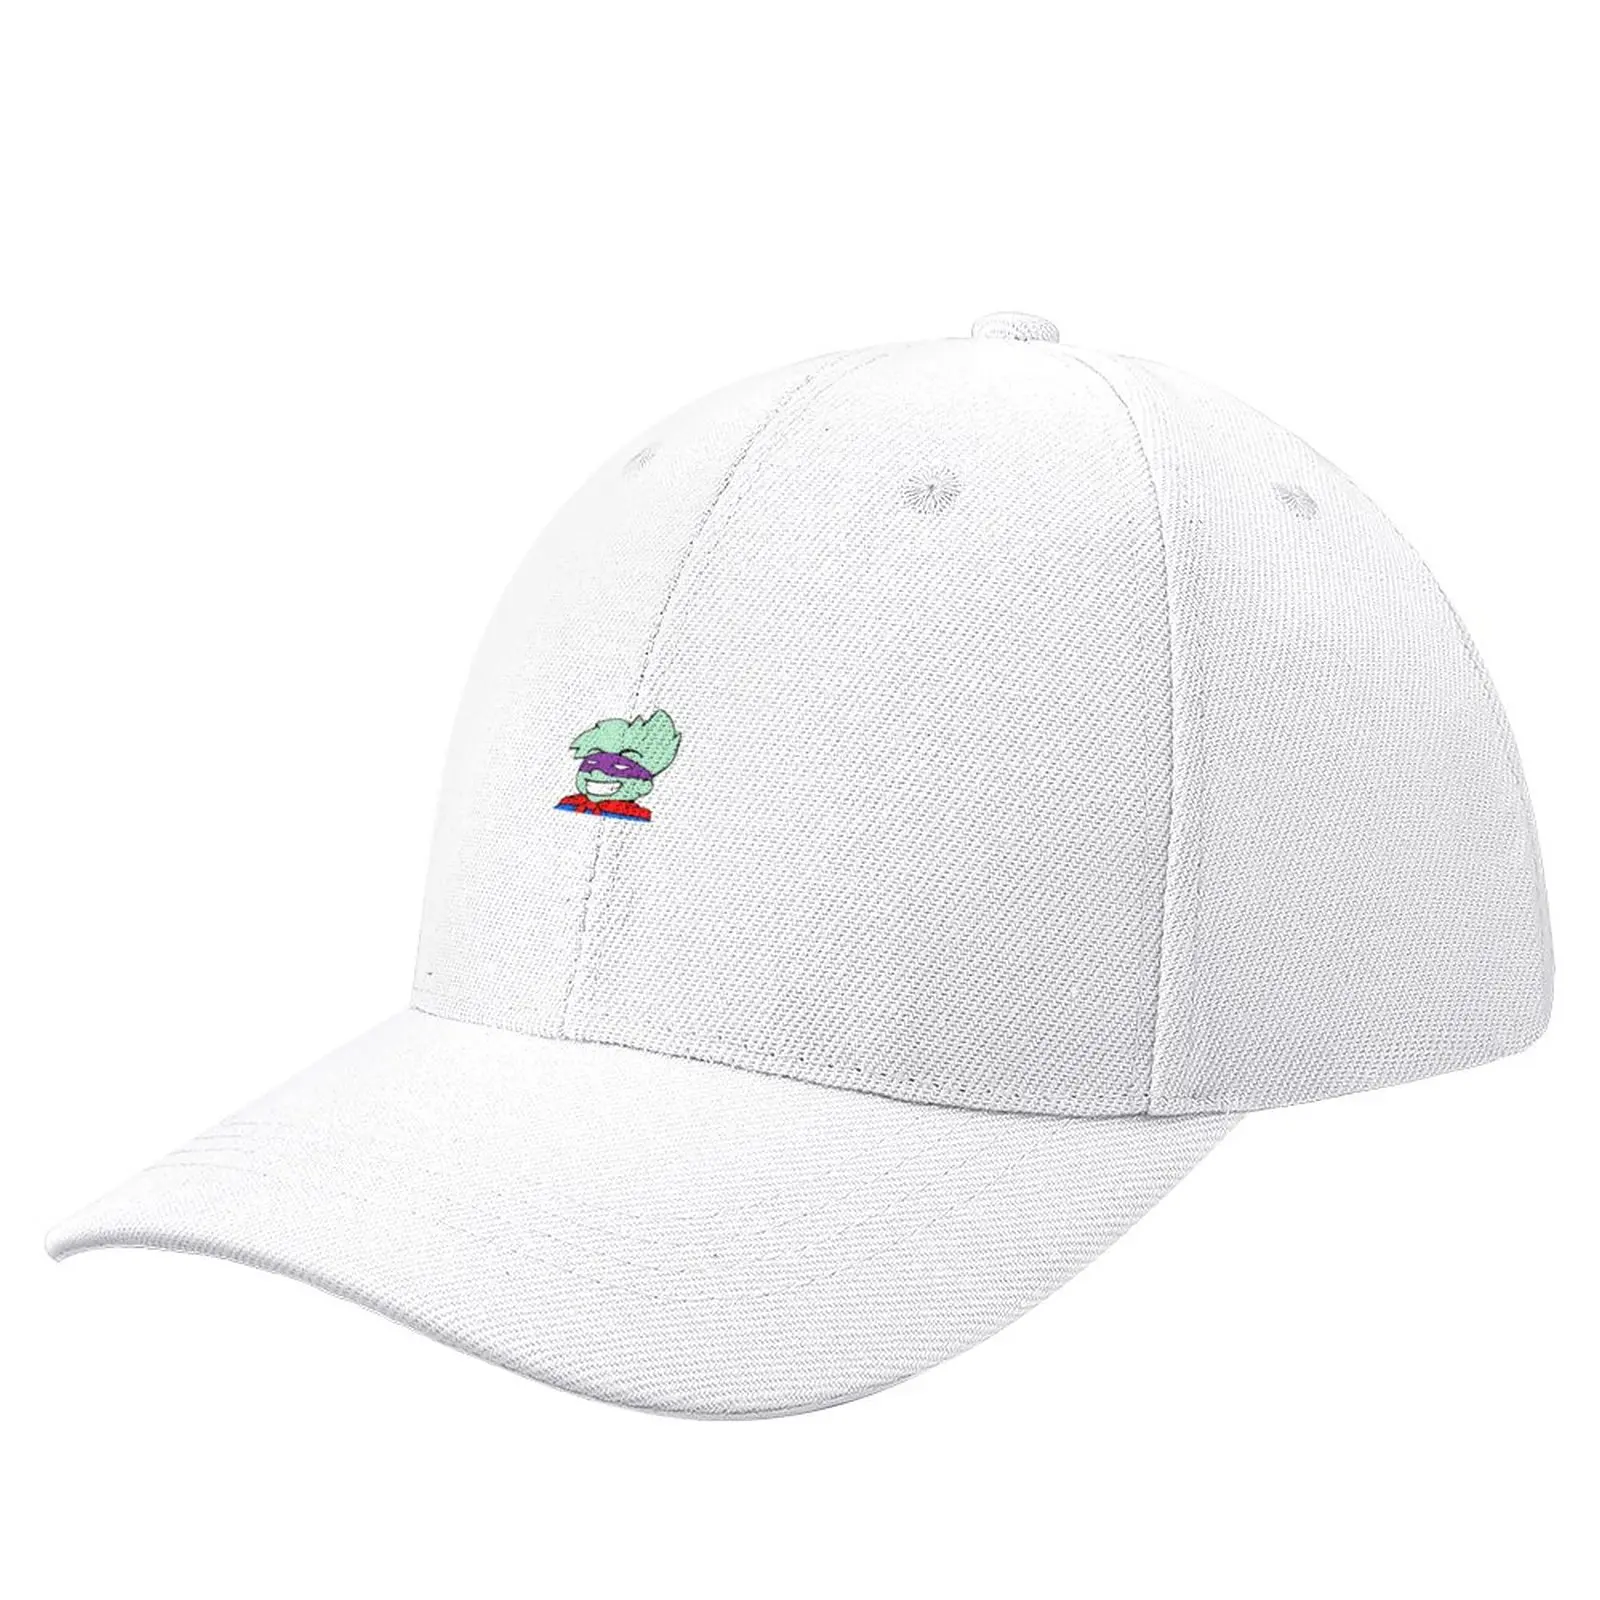 

Pajama Sam Baseball Cap New Hat derby hat Cap For Women Men'S